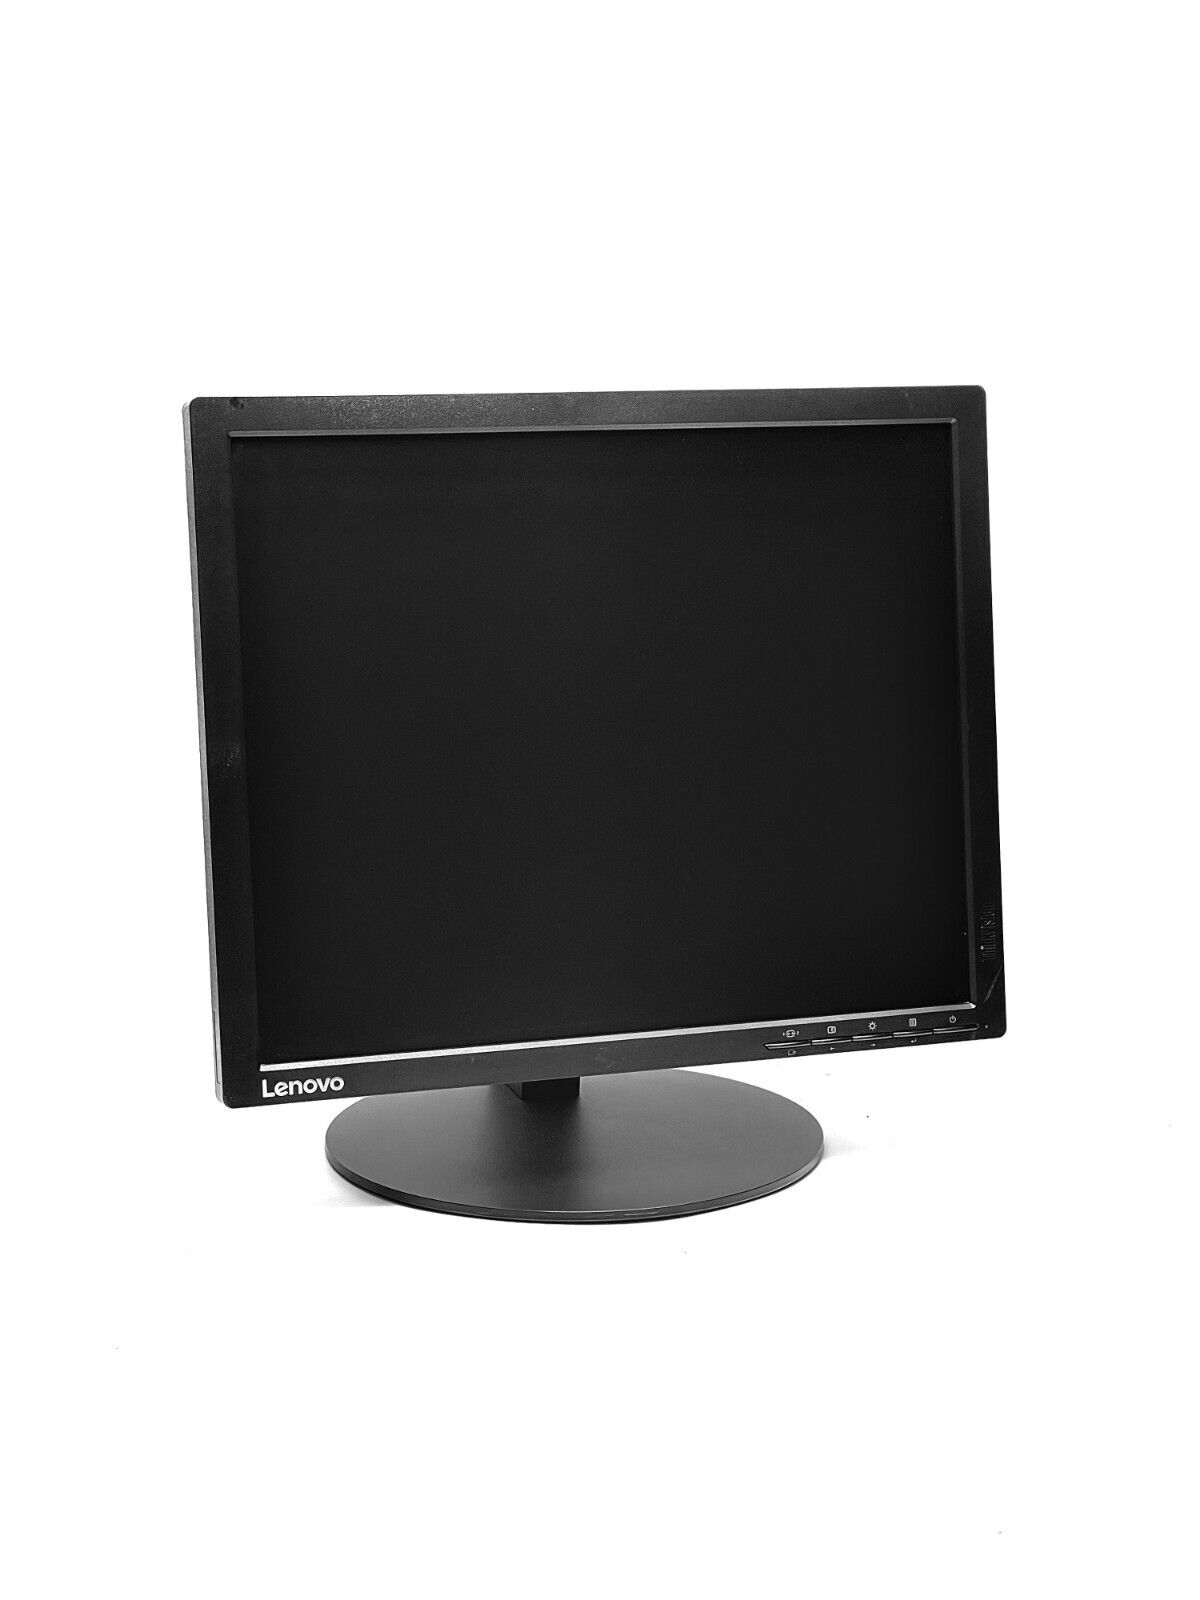 Lenovo ThinkVision T1714PA 17-inch LCD Monitor - Good